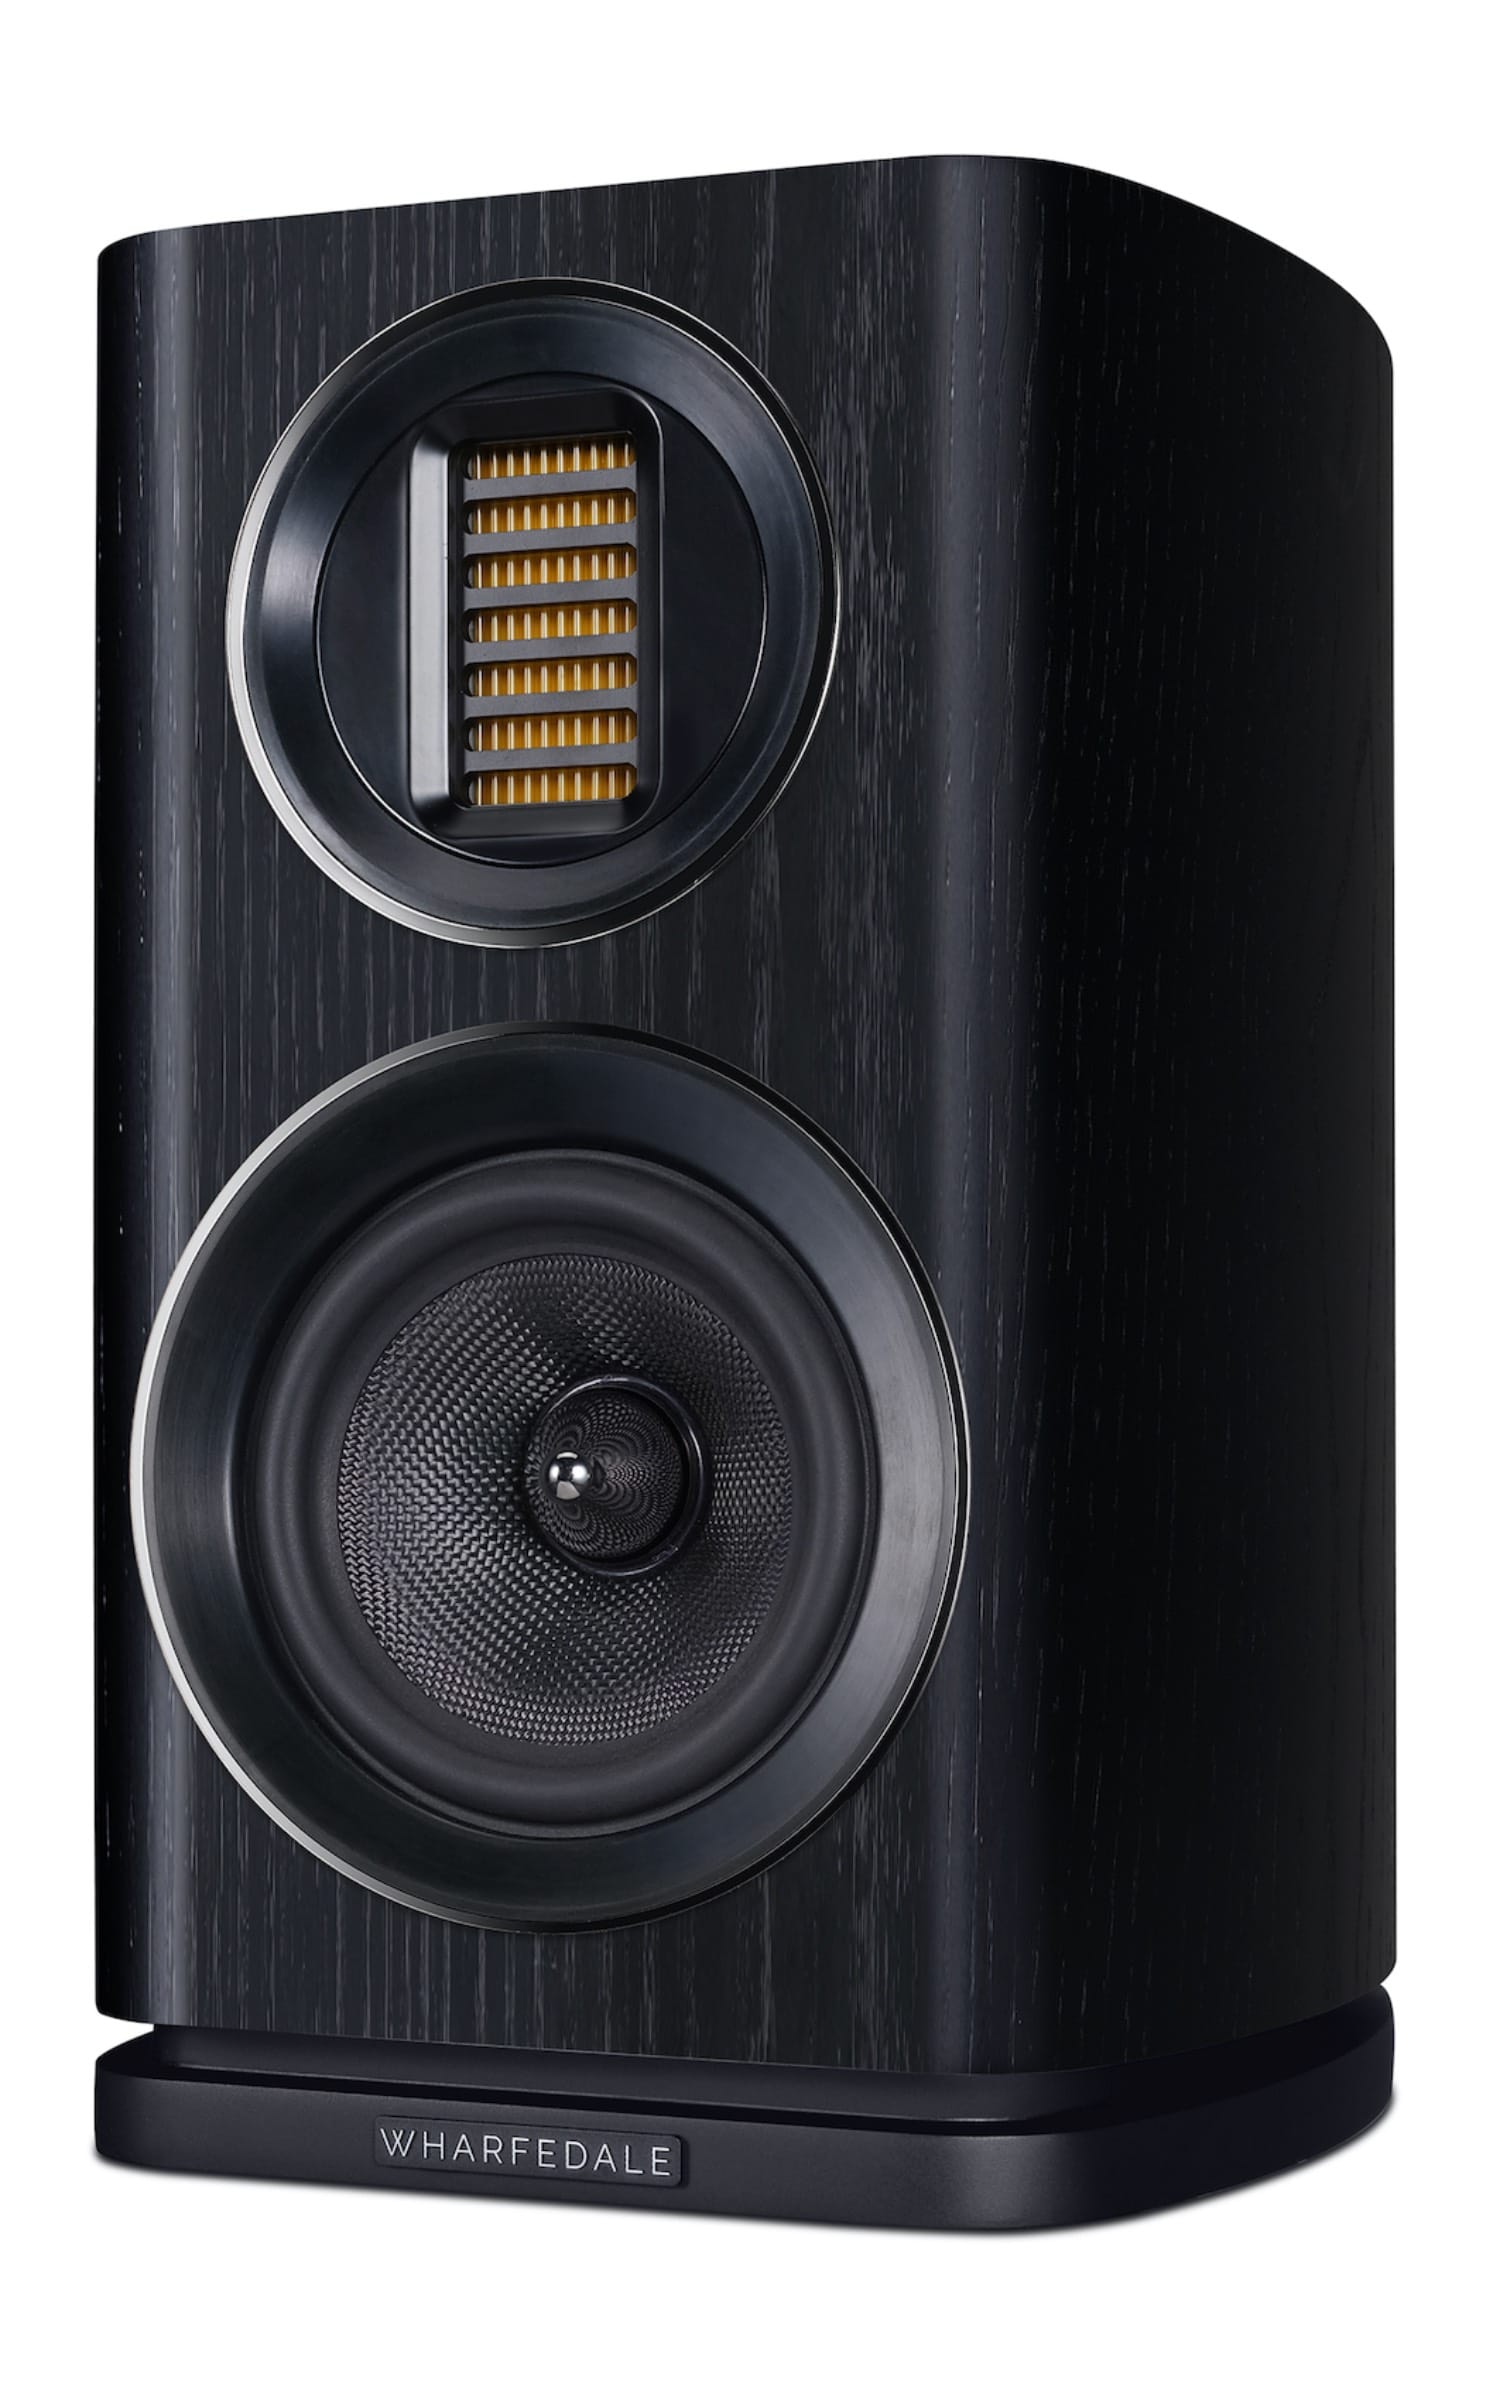 EVO4 Series speakers From Wharfedale 